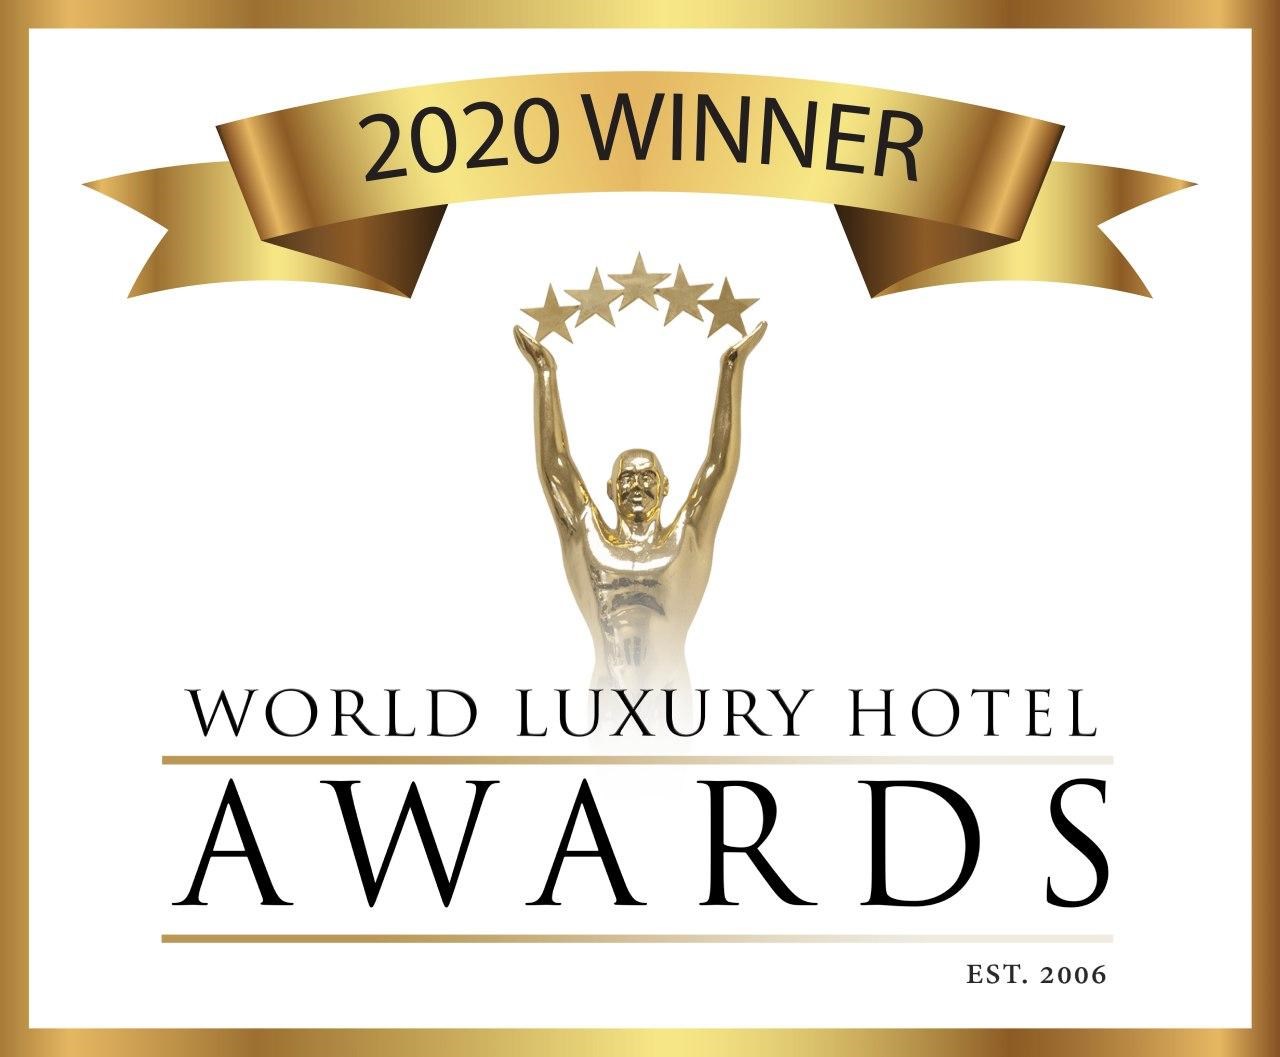 World luxury travel awards 2020 winner